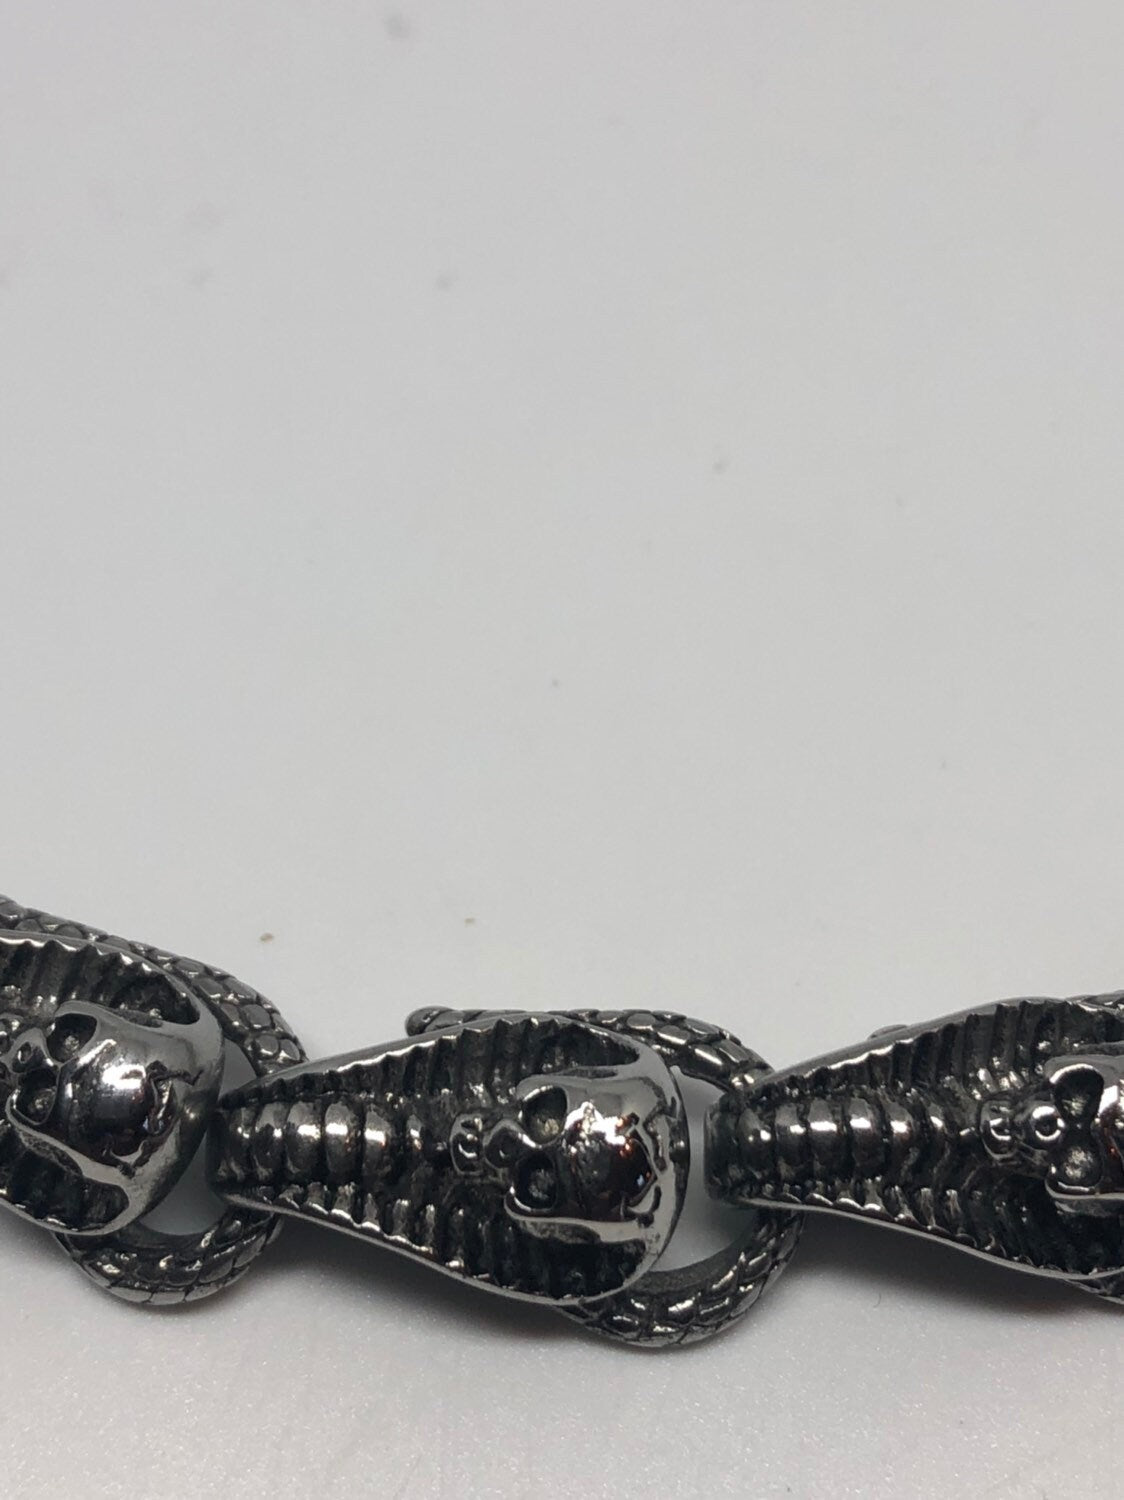 Vintage Handmade Silver Stainless Steel Gothic Cobra Snake Skull Necklace